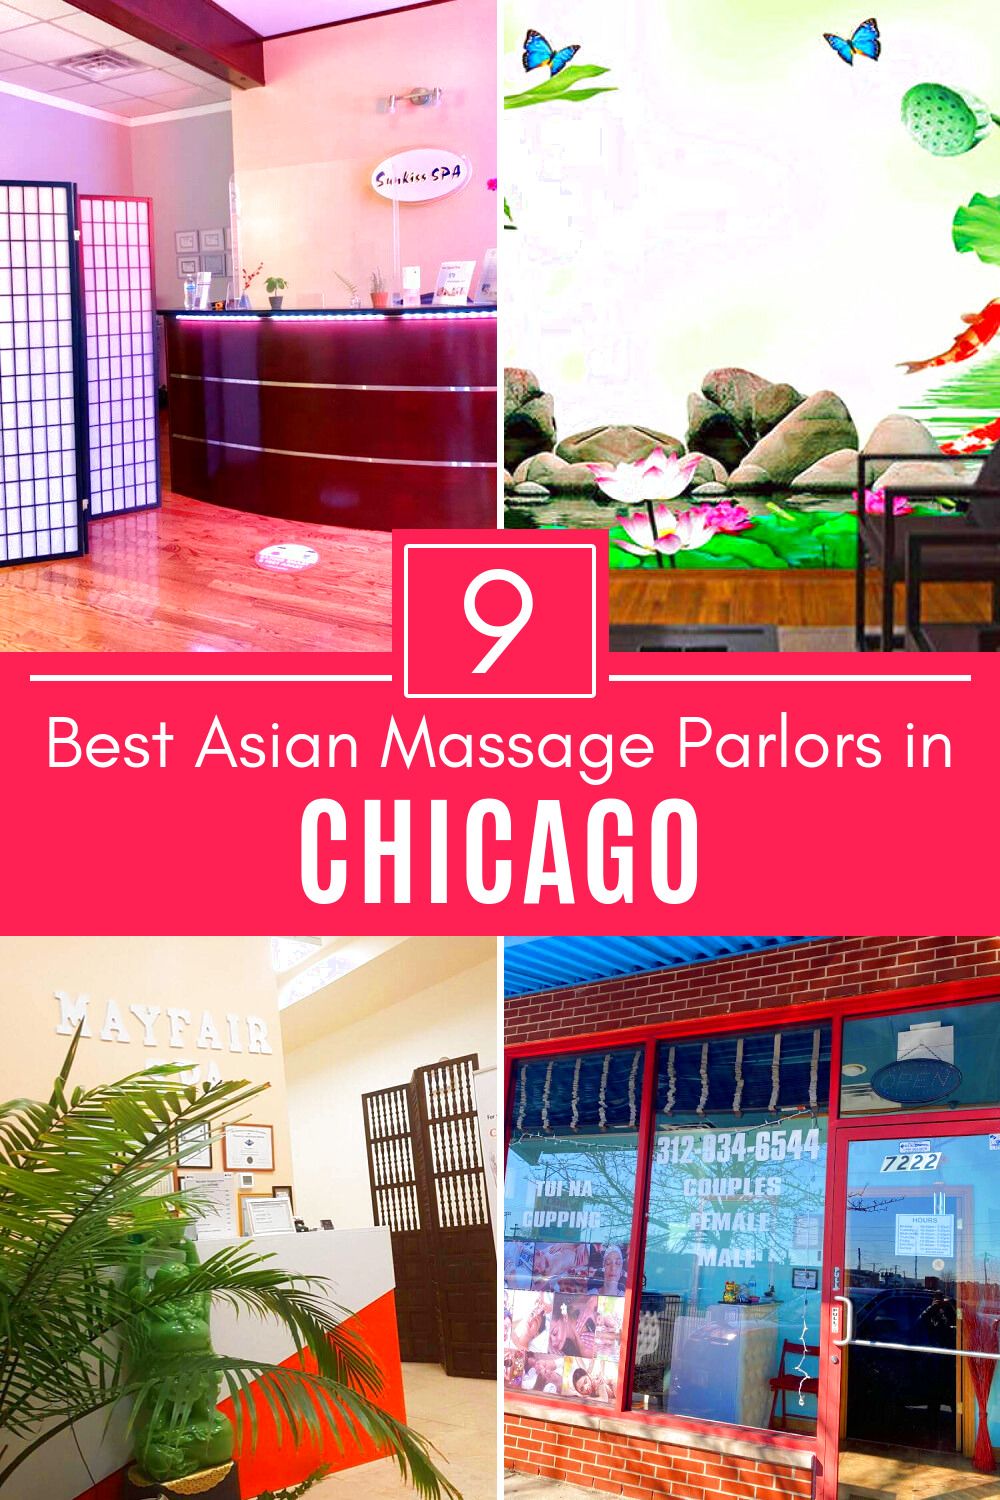 bella bila recommends Chicago Erotic Massage Parlor